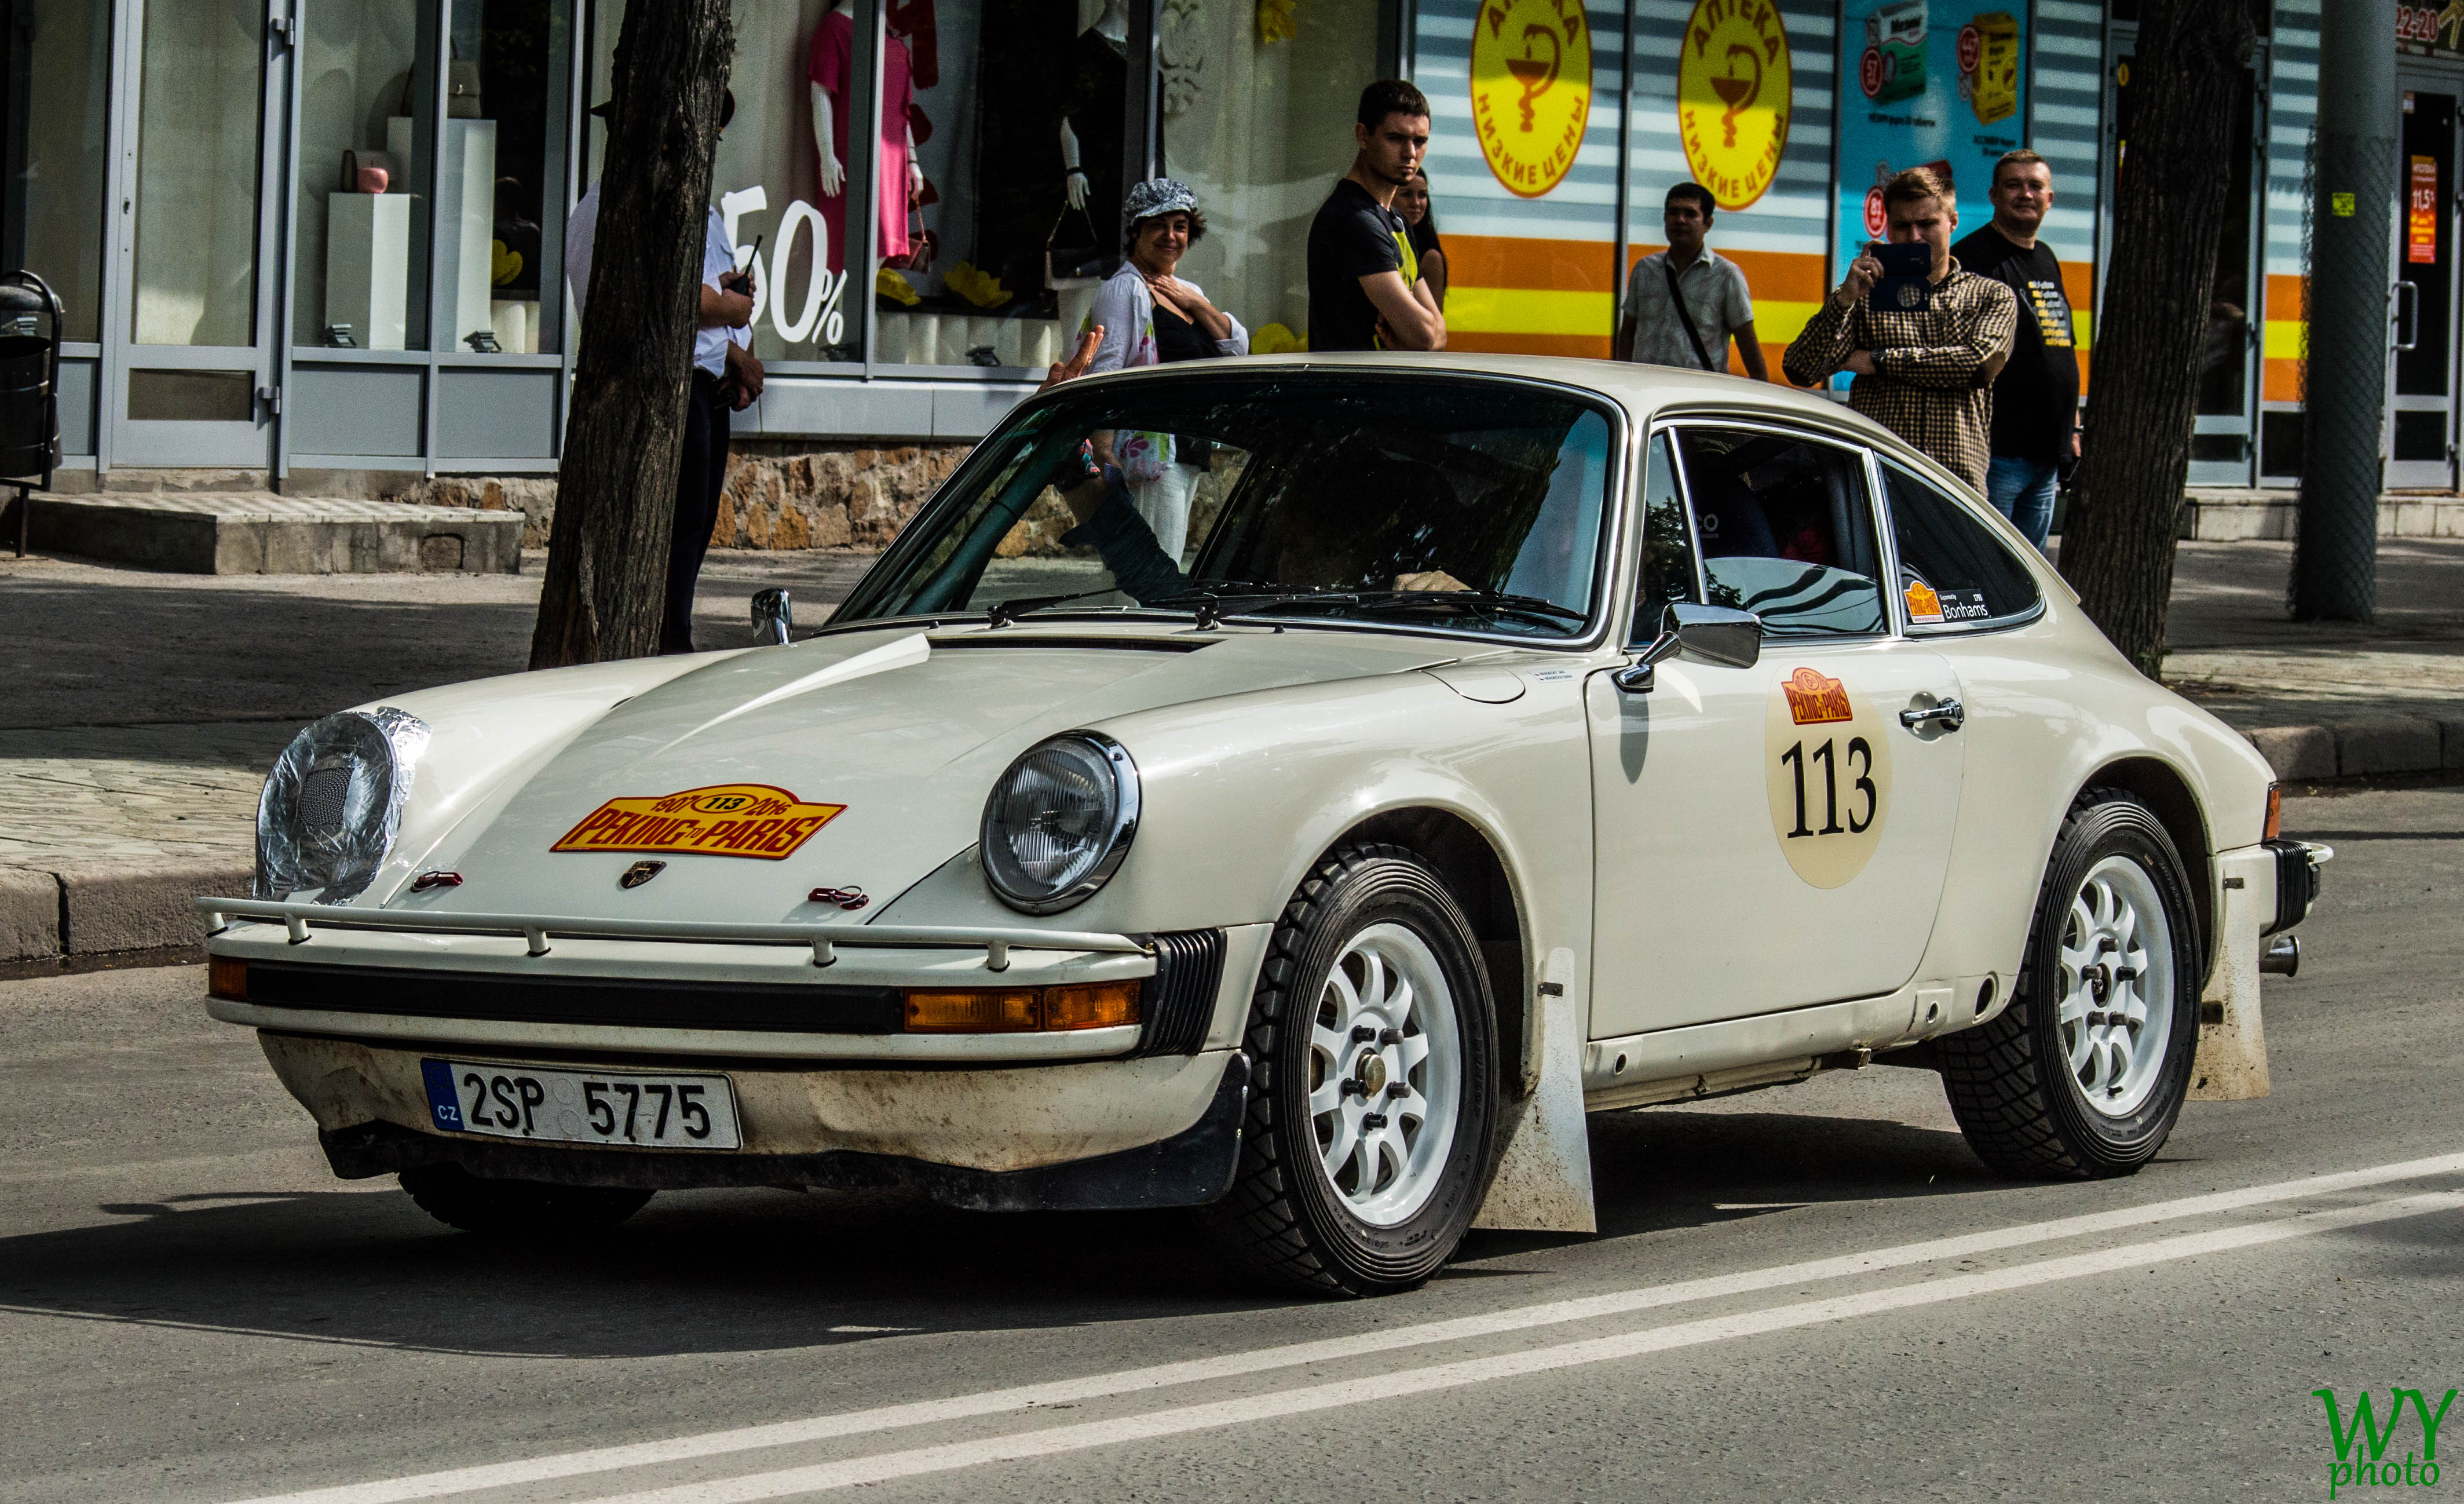 1974 Porsche 911 - Jan Hradecky & Dana Hradecka, Auto racing, Car, Outdoor, Peking2Paris2016, HQ Photo